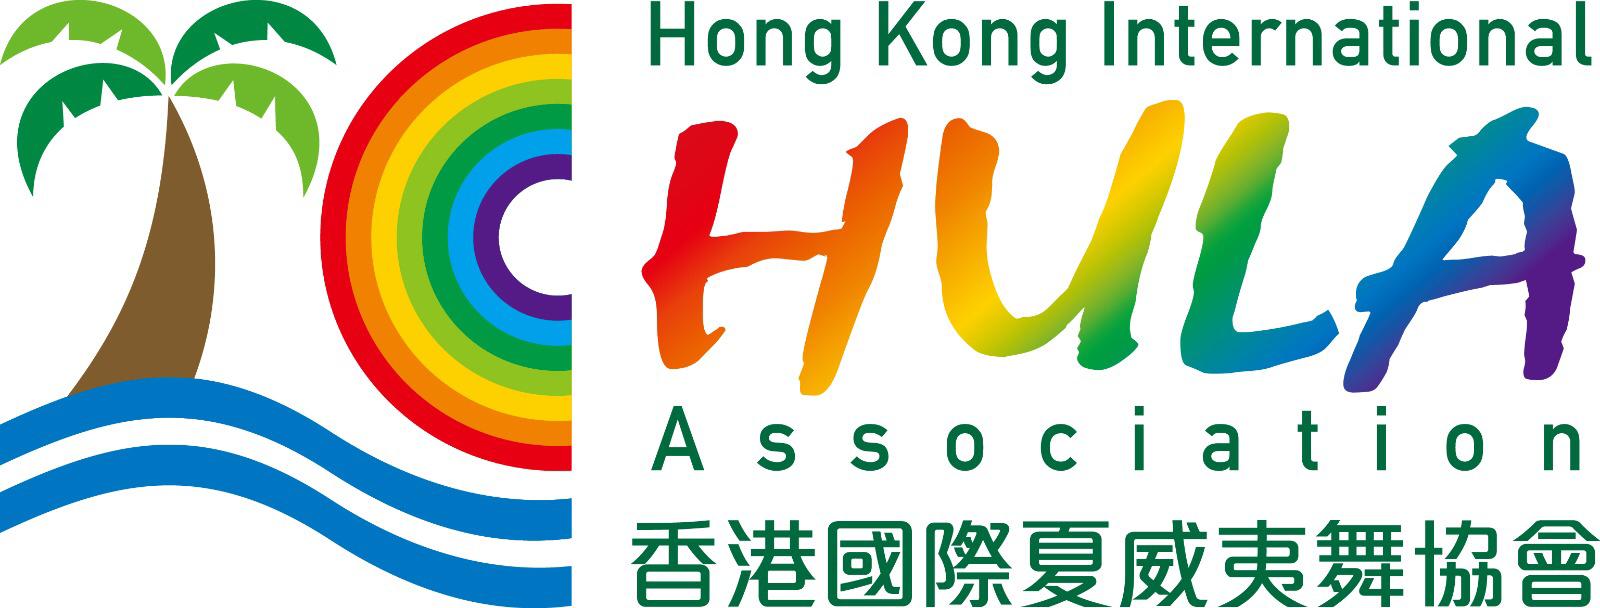 Hong Kong International Hula Association